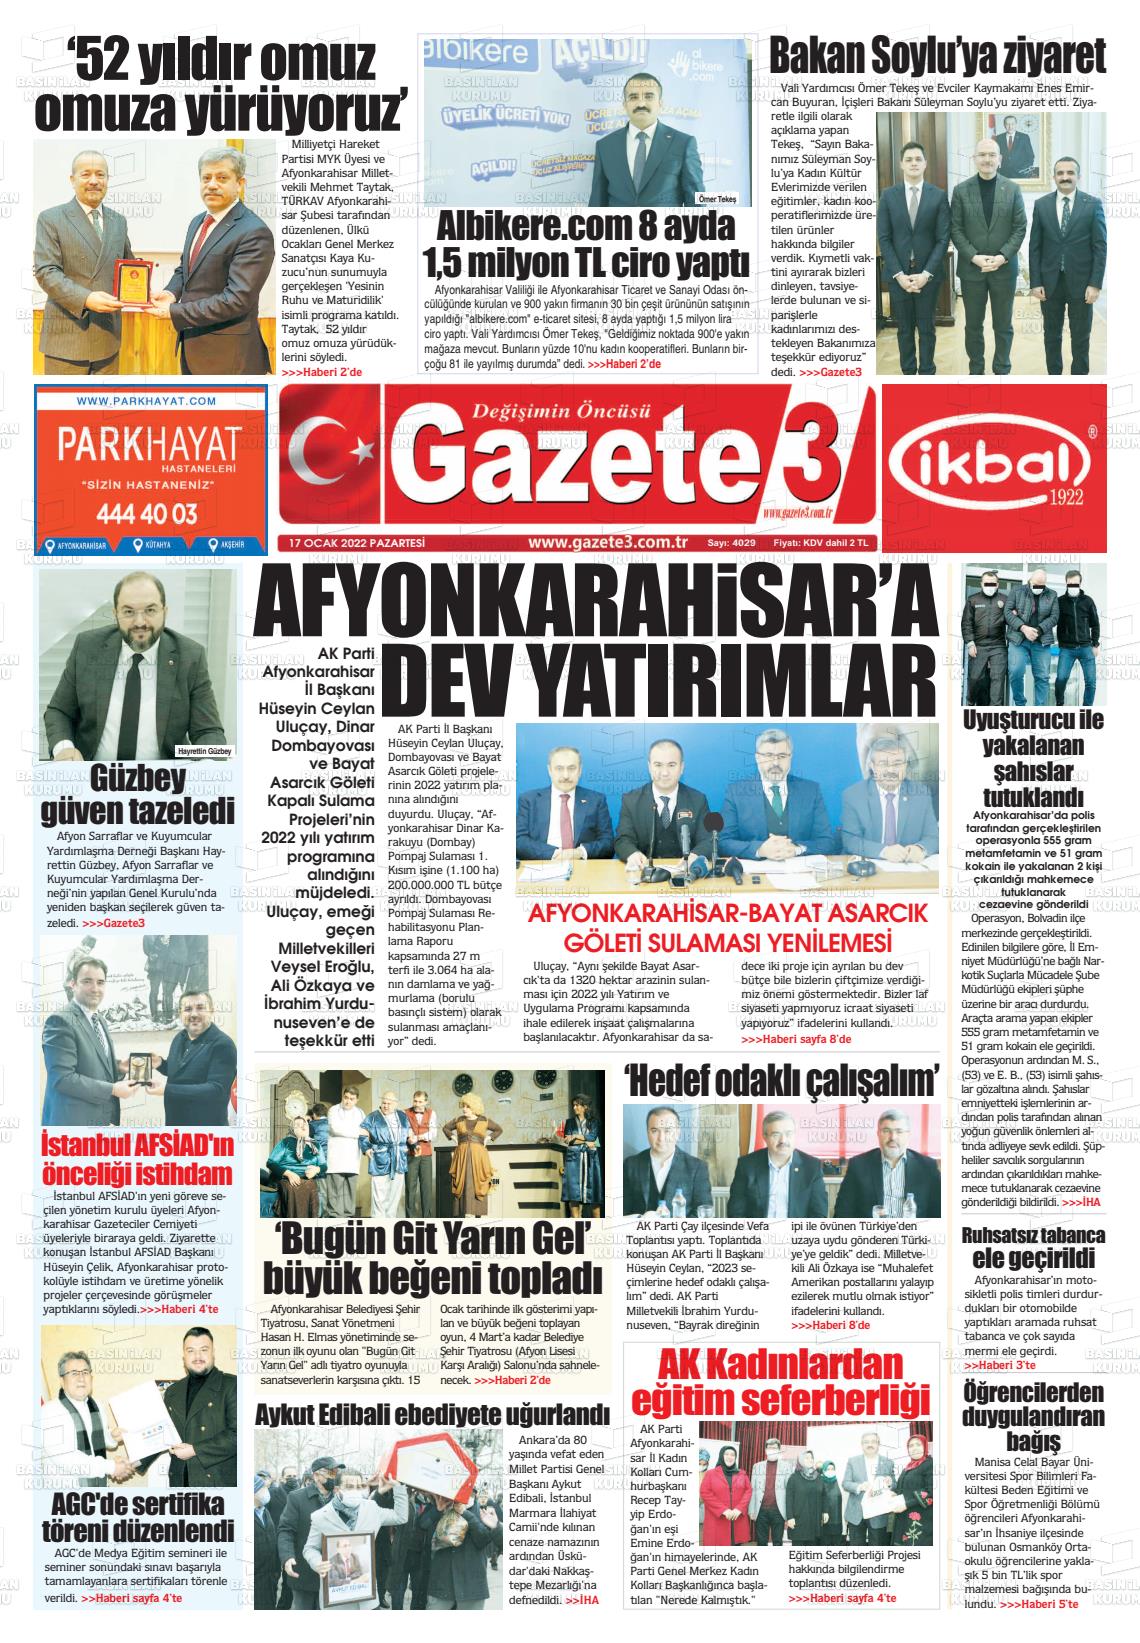 17 Ocak 2022 Gazete 3 Gazete Manşeti